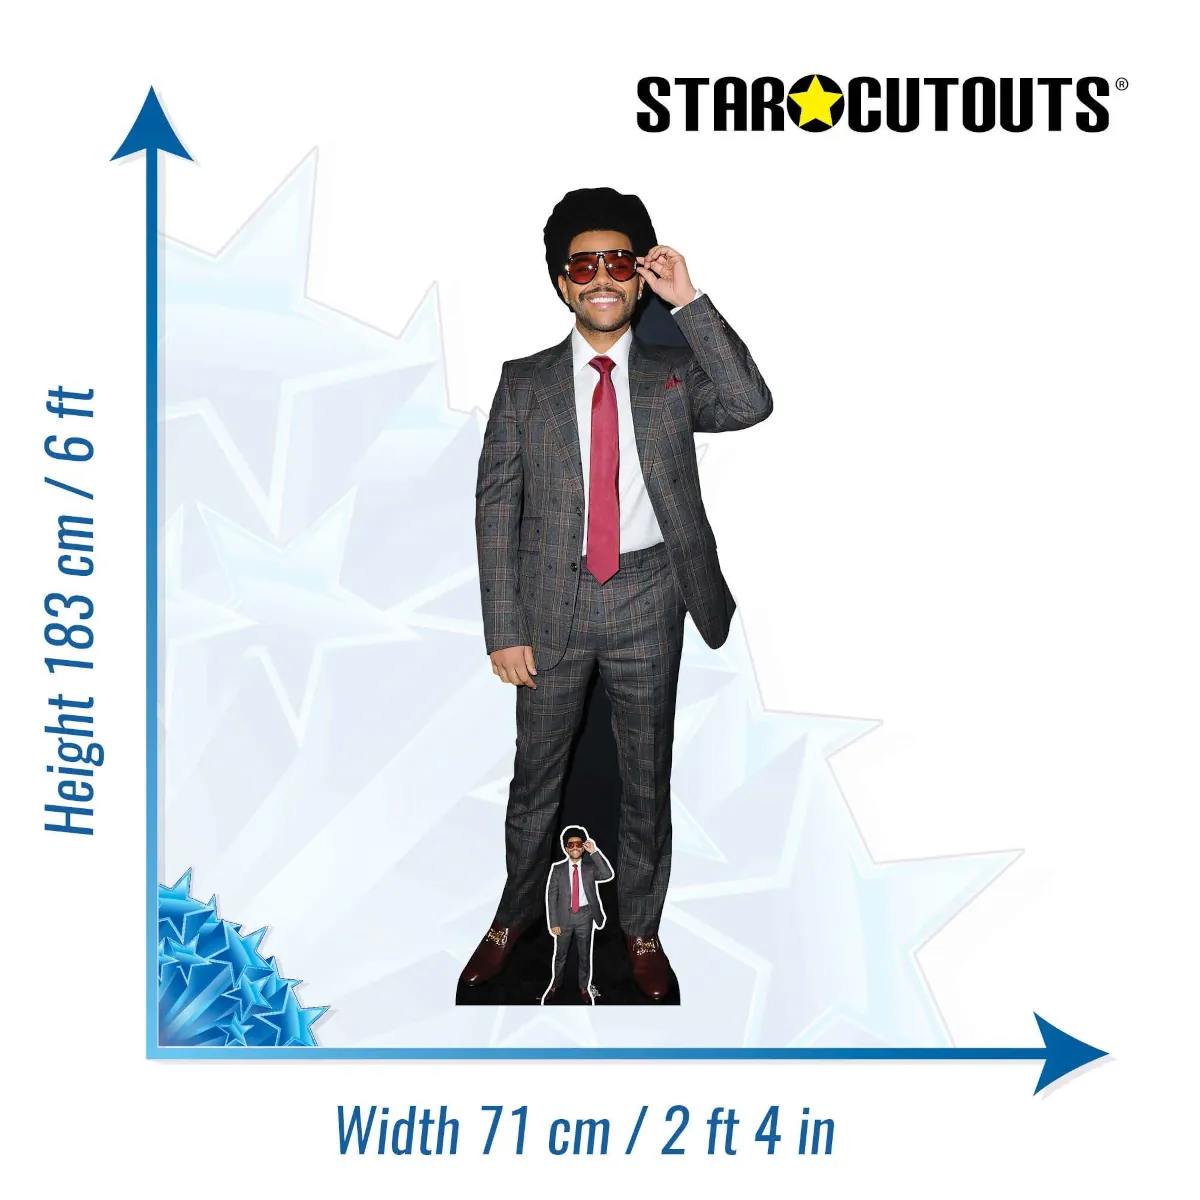 CS987 The Weeknd (Canadian Singer) Lifesize + Mini Cardboard Cutout Standee Size